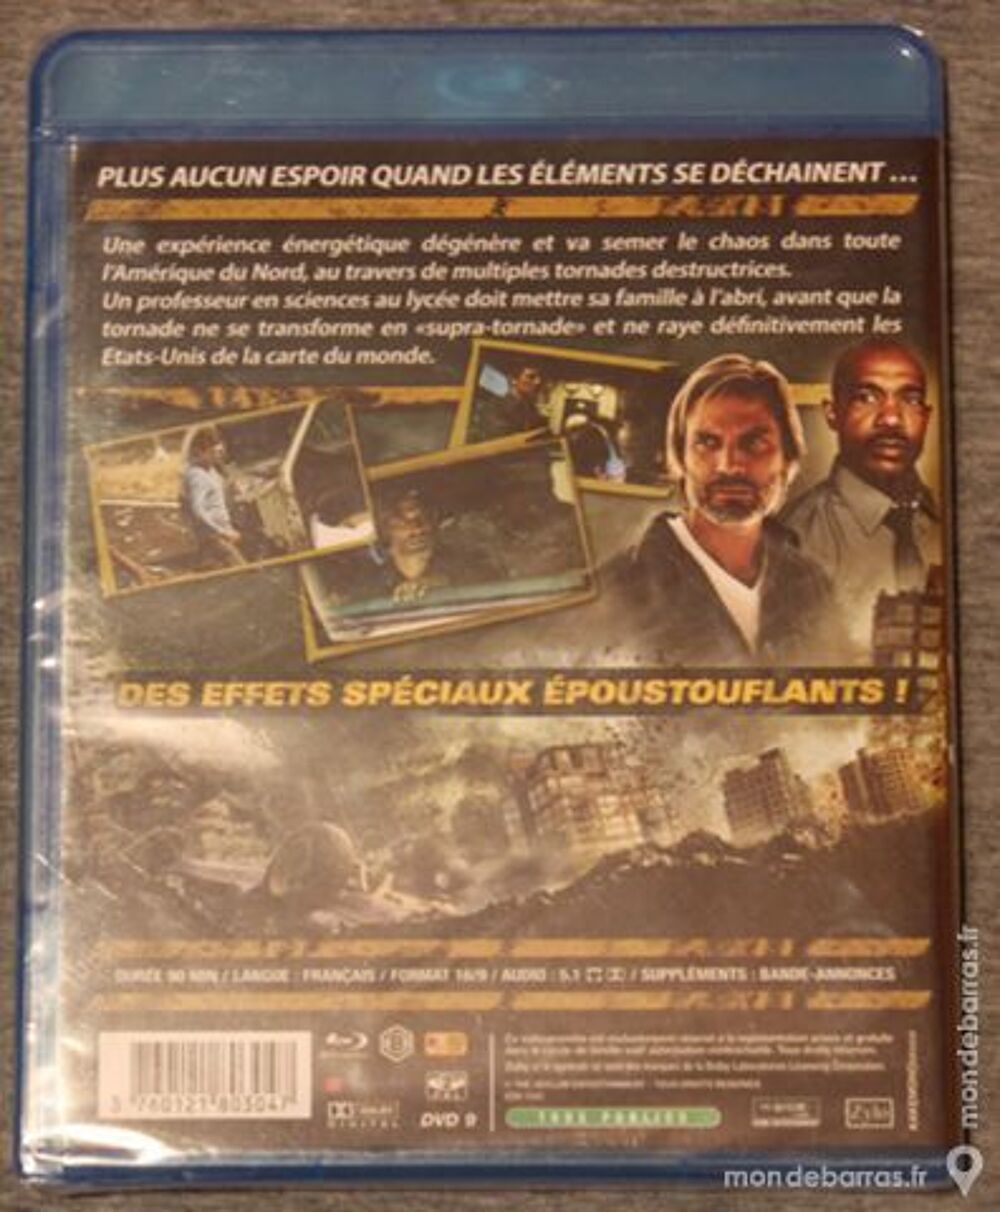 Blu-Ray Avis de tempete 5 euros DVD et blu-ray